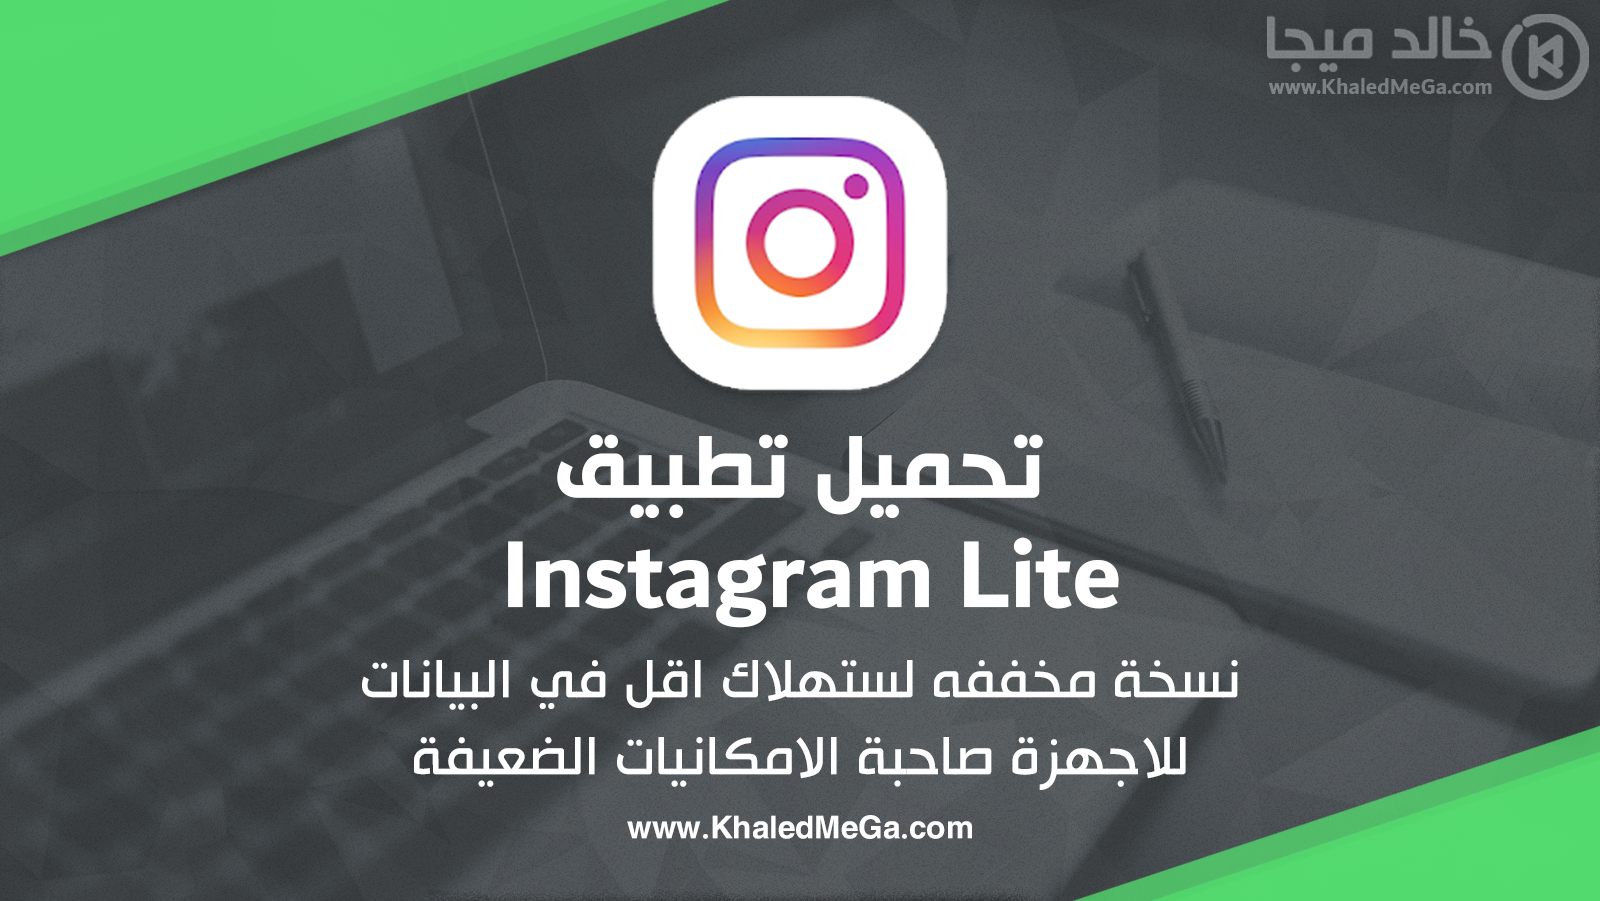 تحميل برنامج انستقرام عربي للاندرويد احدث اصدار Instagram رابط مباشر